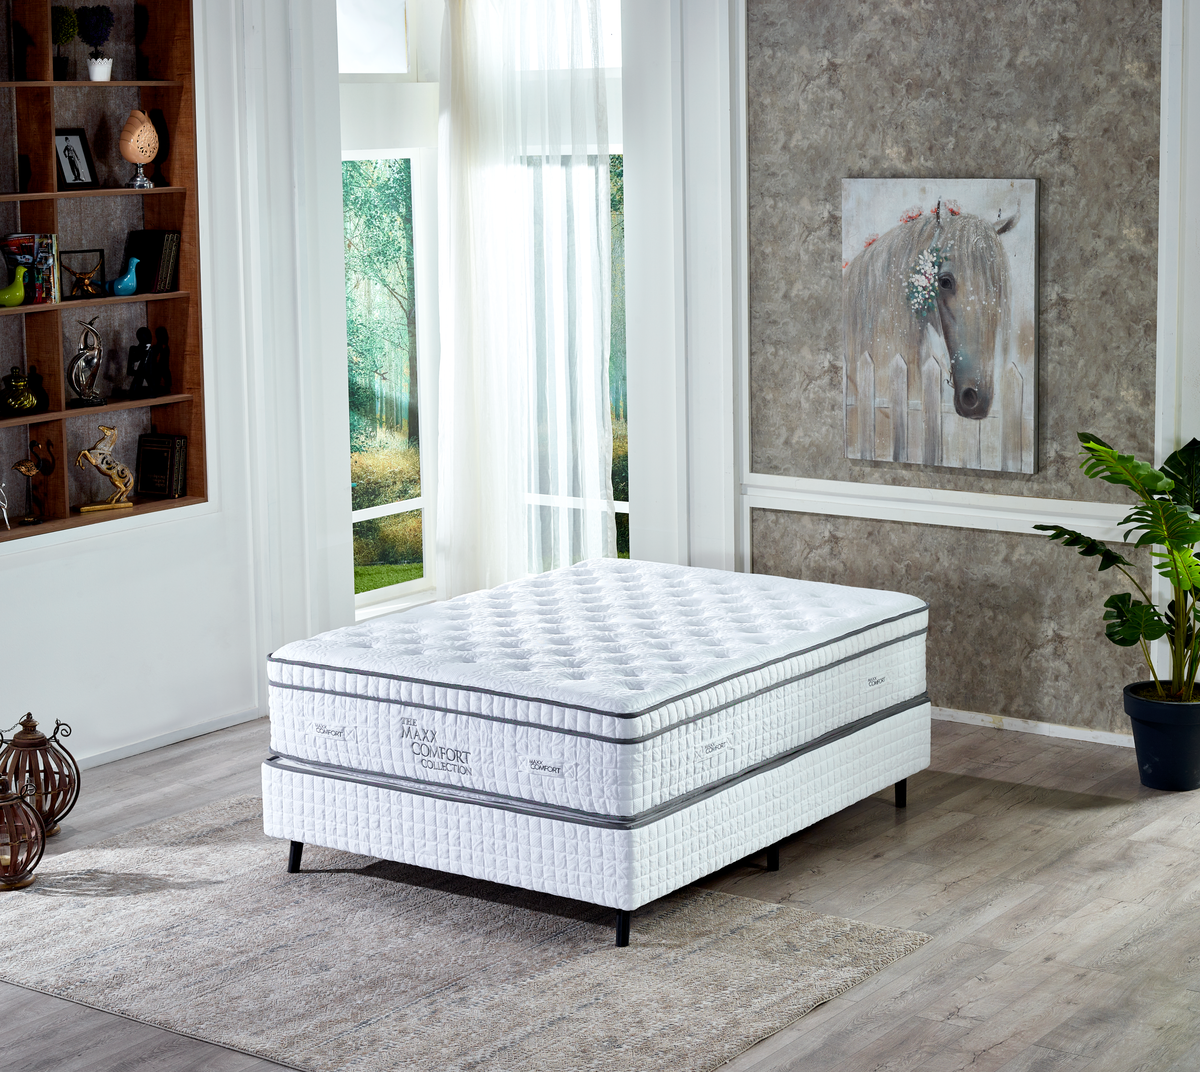 MAXX 15" mattress is shown in a modern bedroom